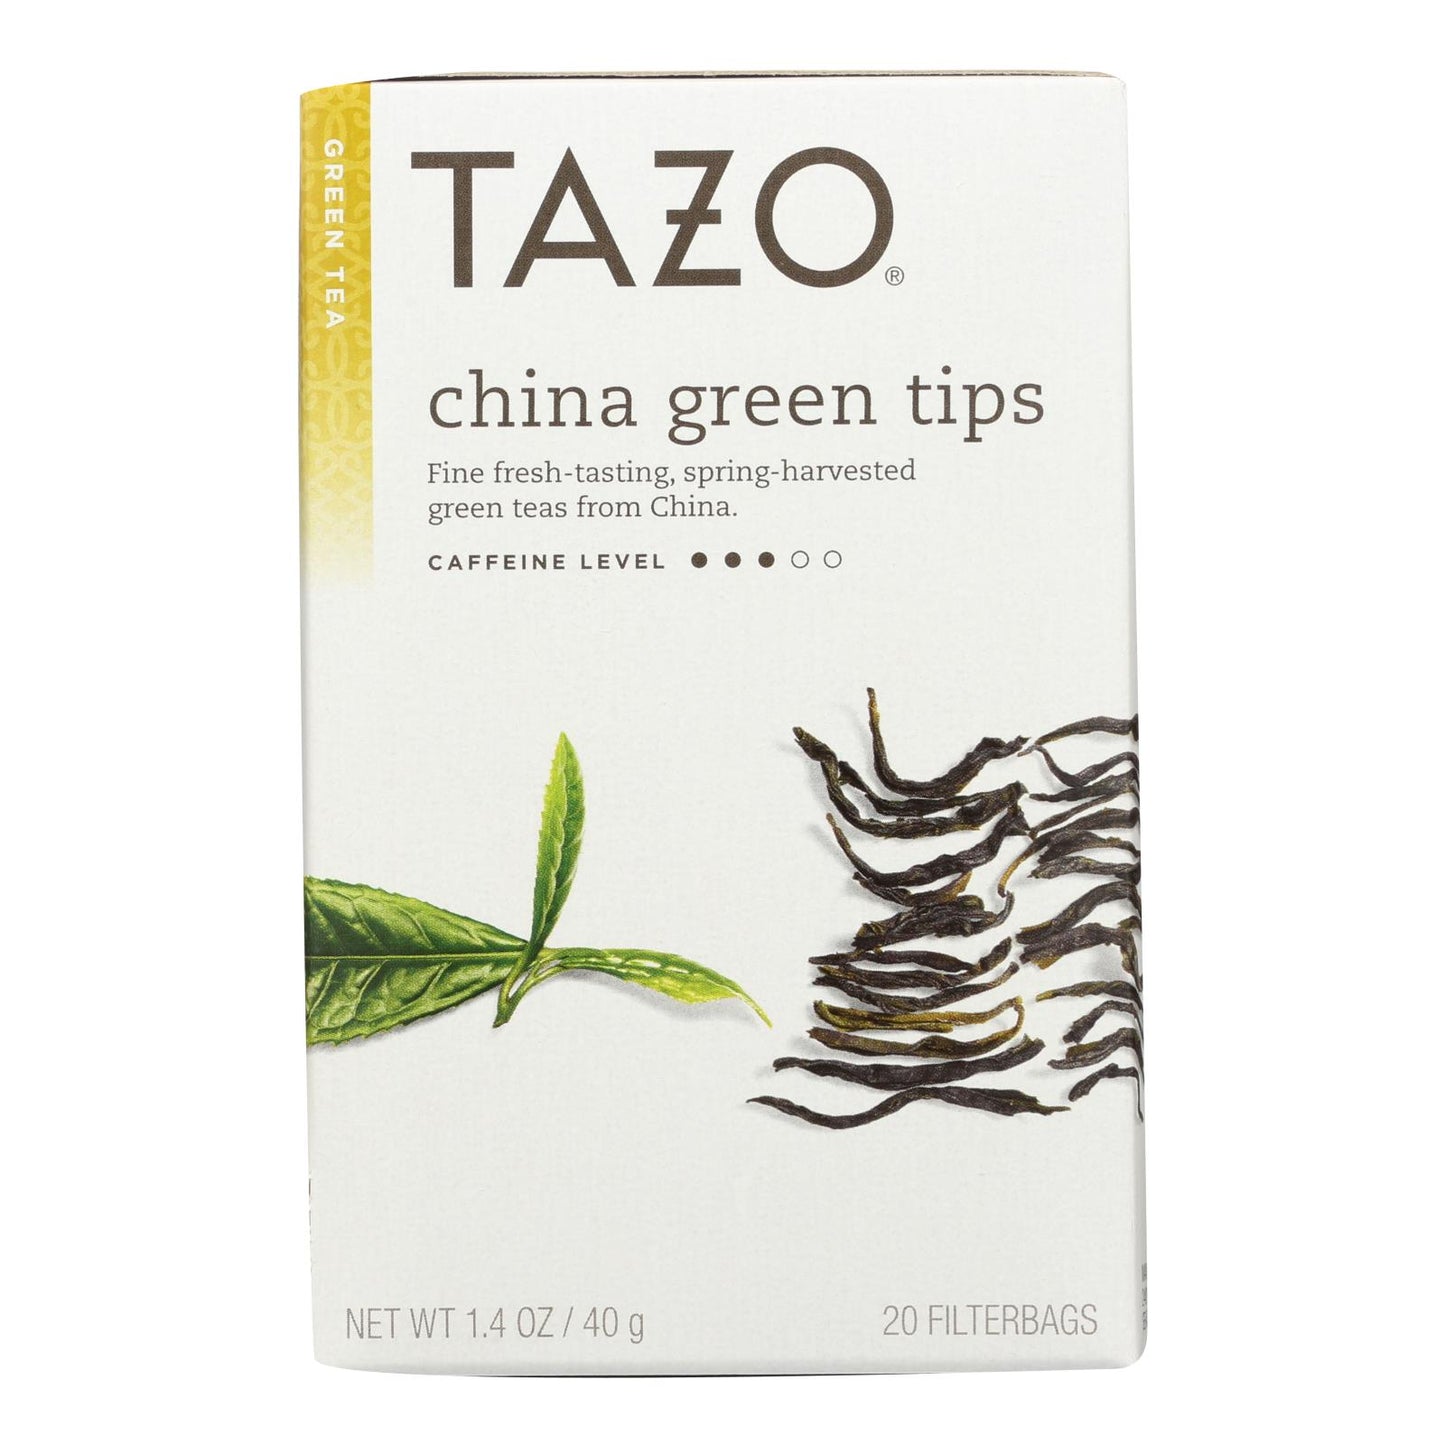 Tazo Tea Green Tea - China Tips - Case Of 6 - 20 Bag